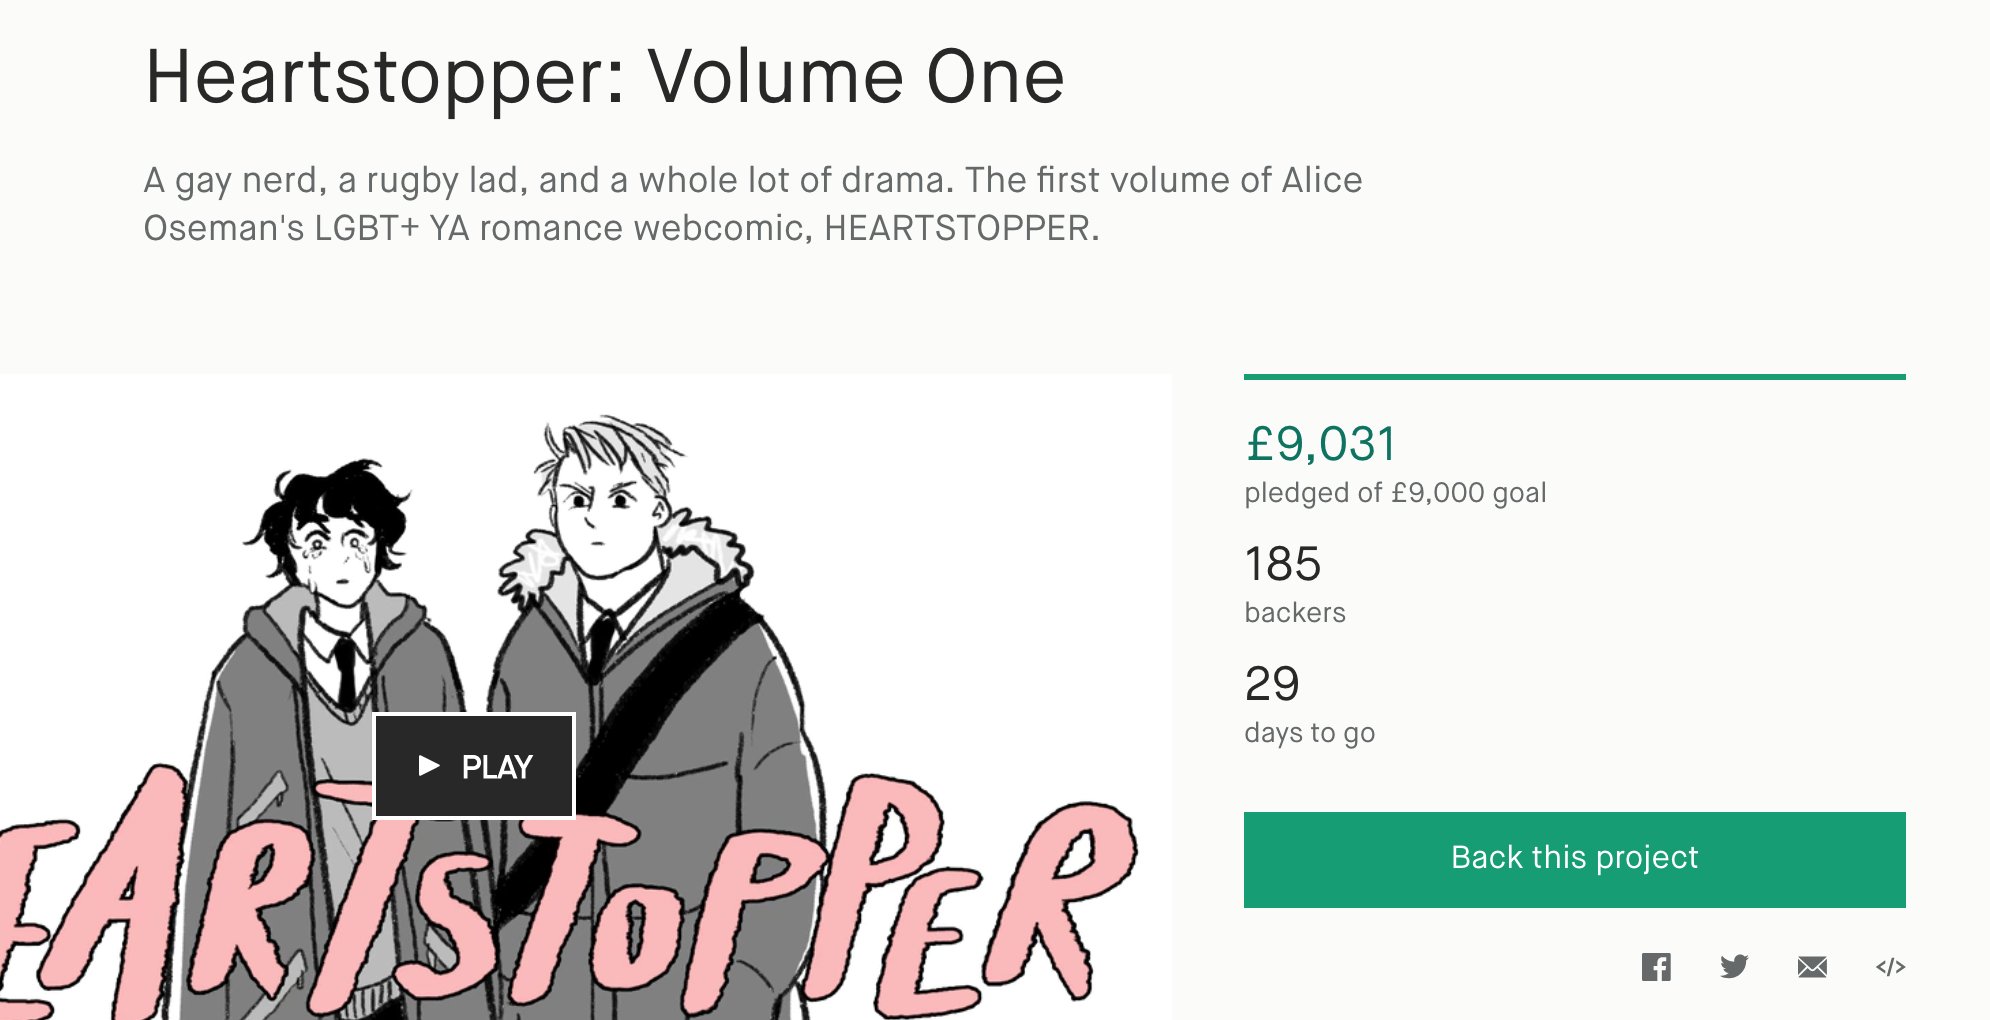 Heartstopper: Volume One by Alice Oseman — Kickstarter